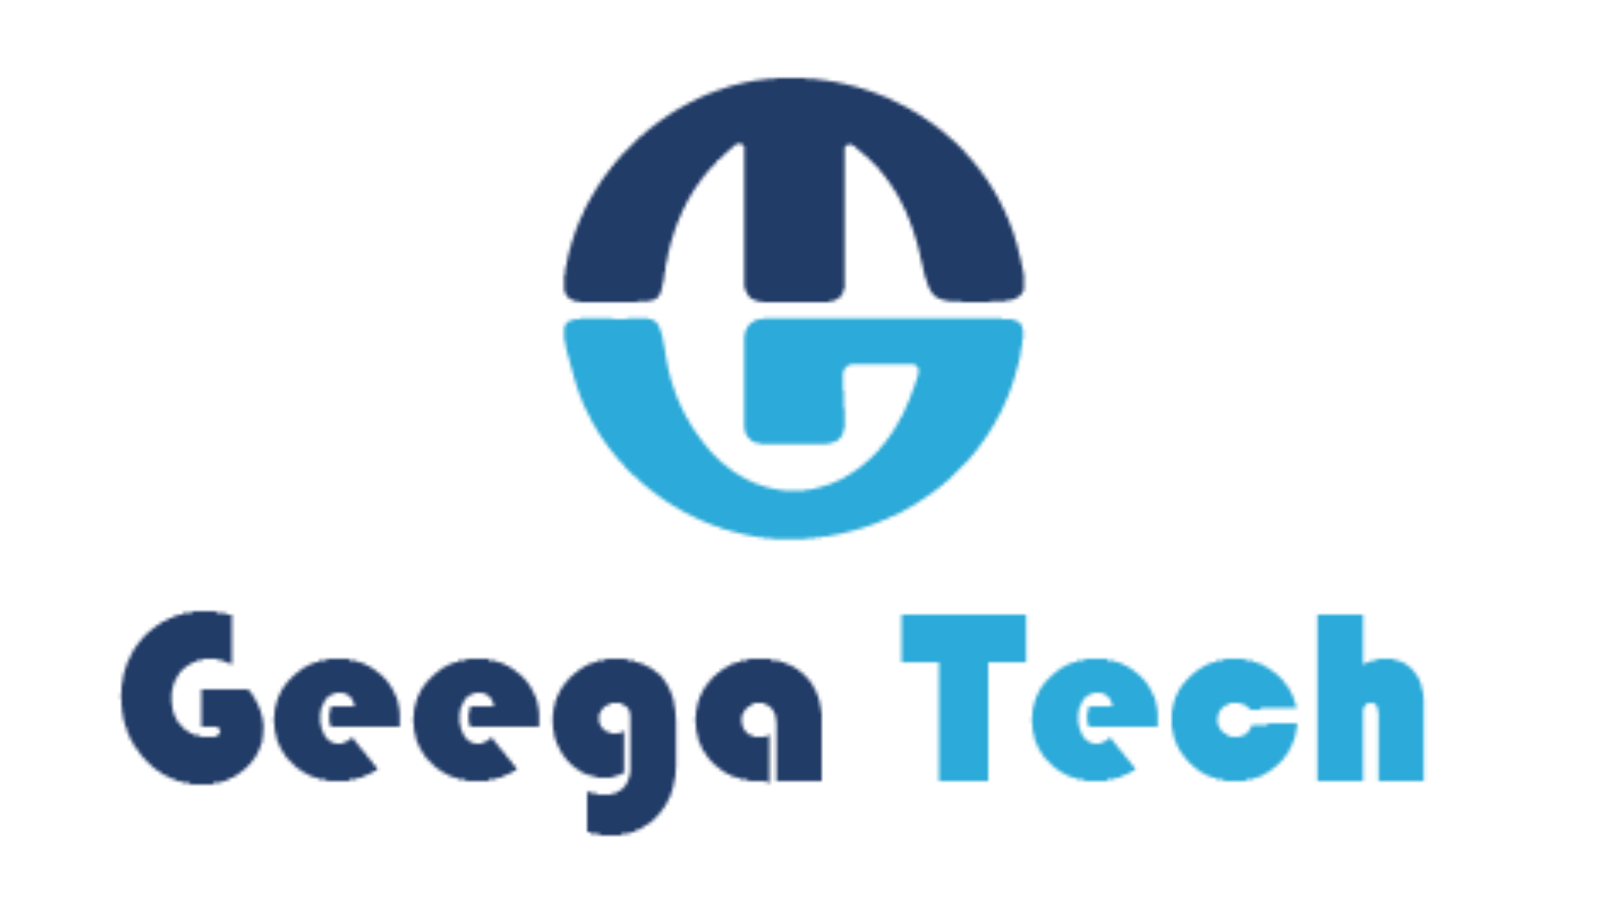 Geega Technologies